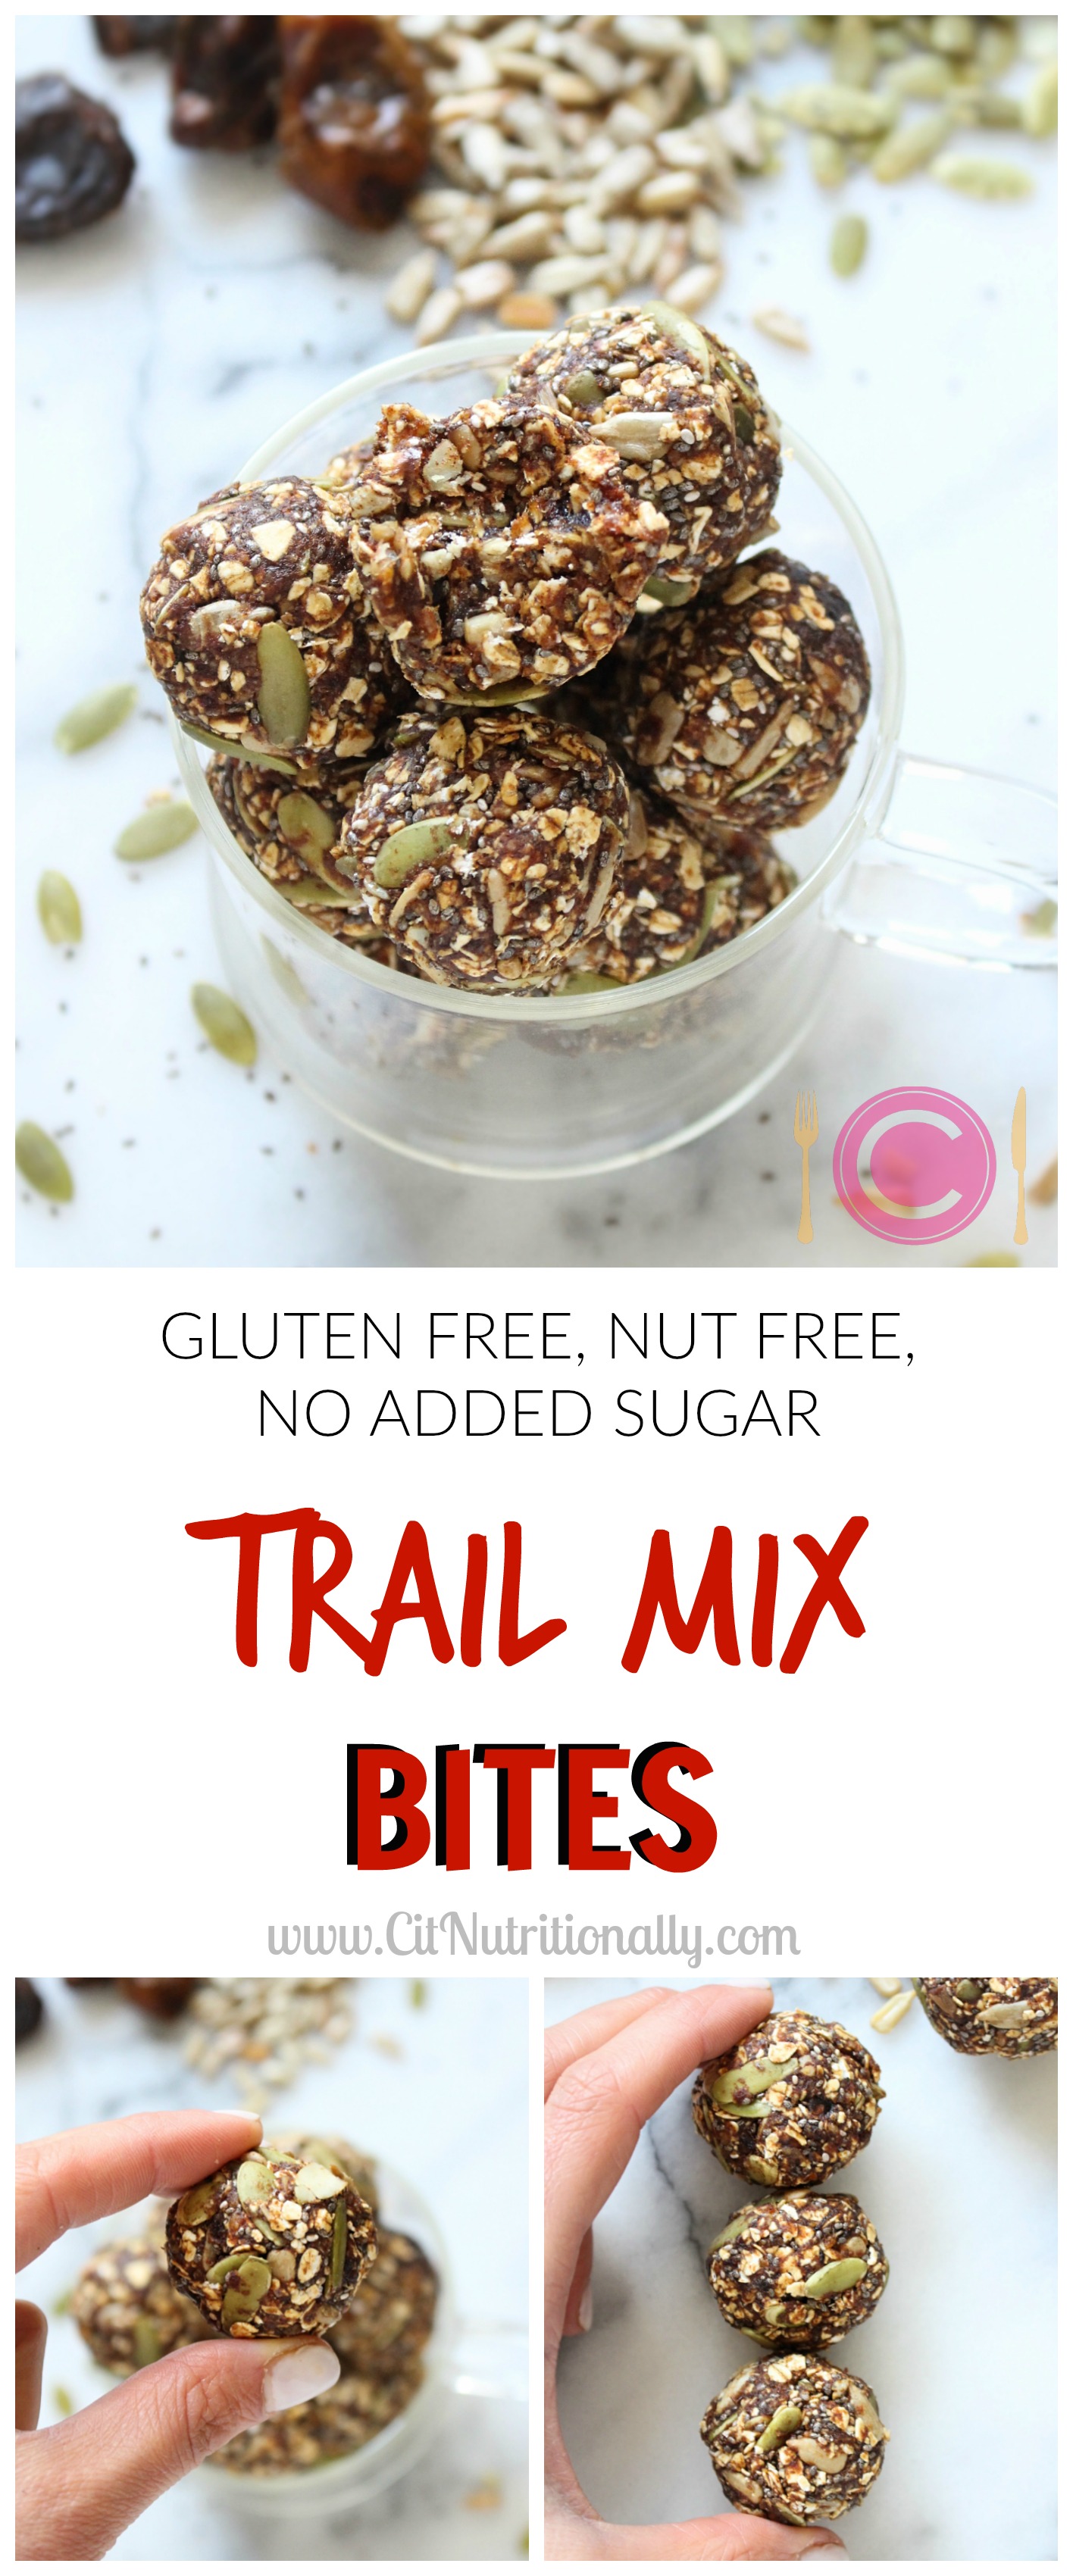 Trail Mix Energy Bites - C it Nutritionally